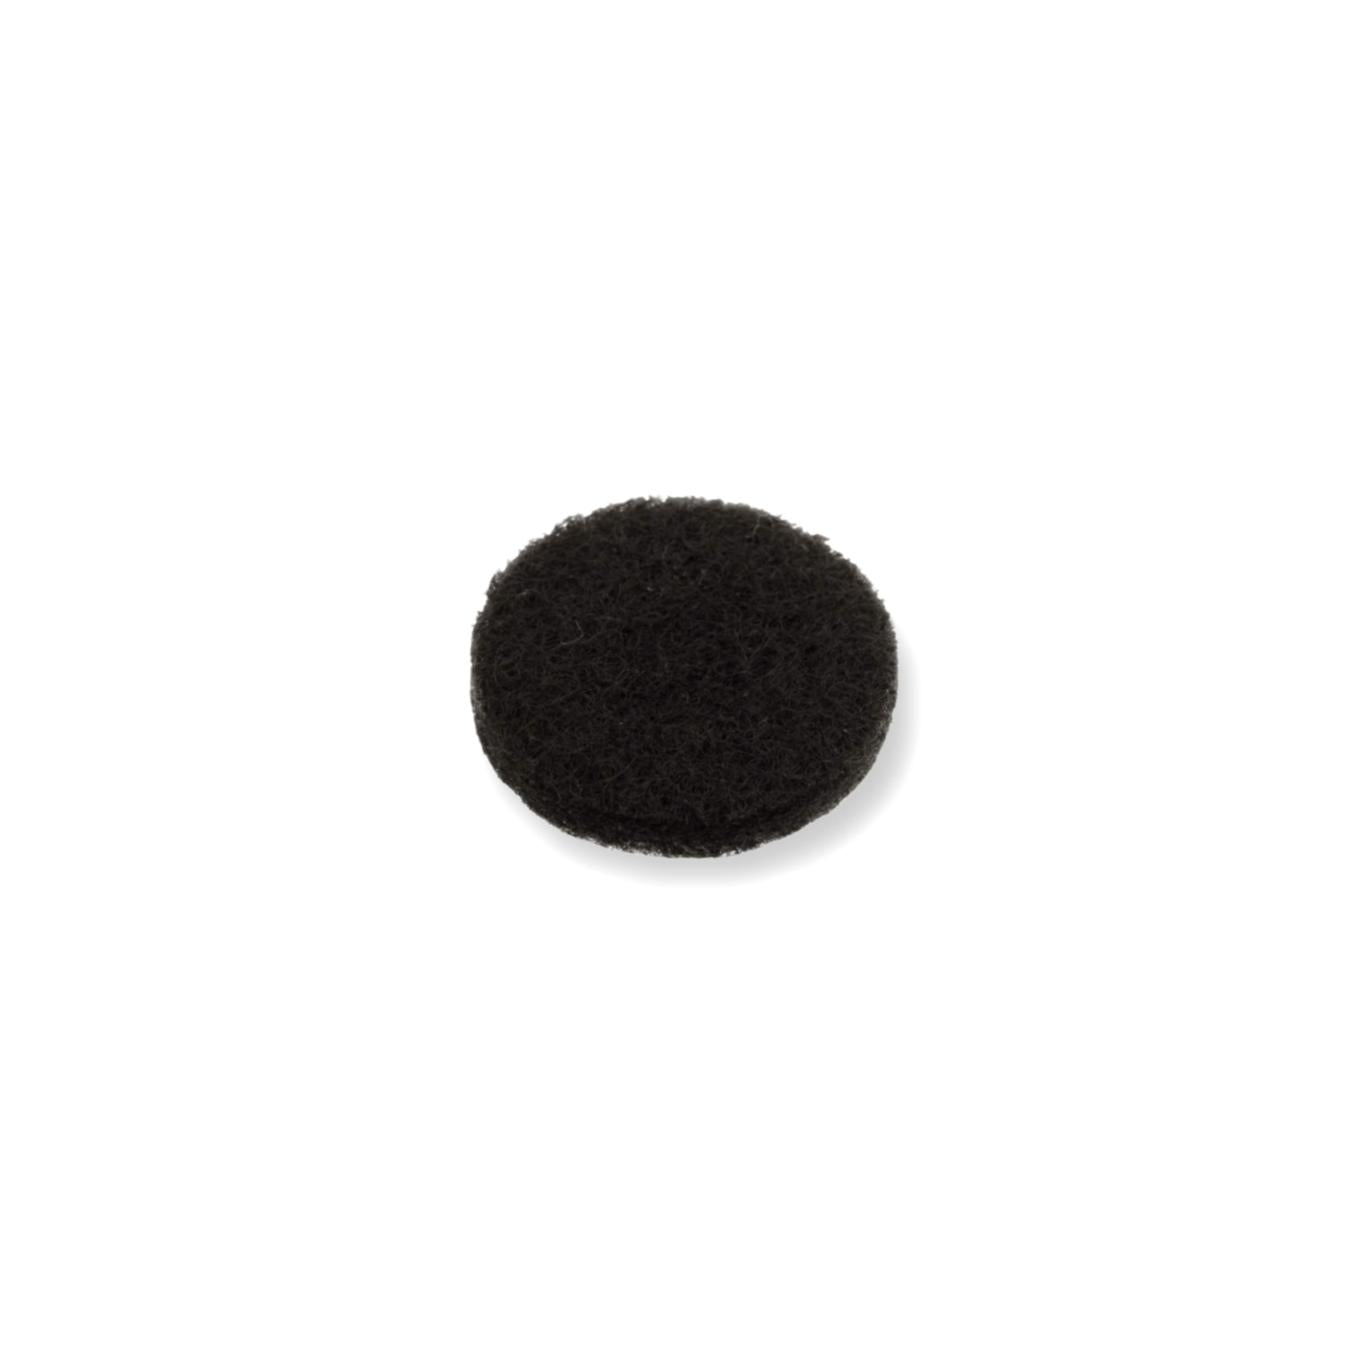 Felt Pads - Dark Brown Self Adhesive Stick on Felt - Round 20mm Diameter - Made in Germany